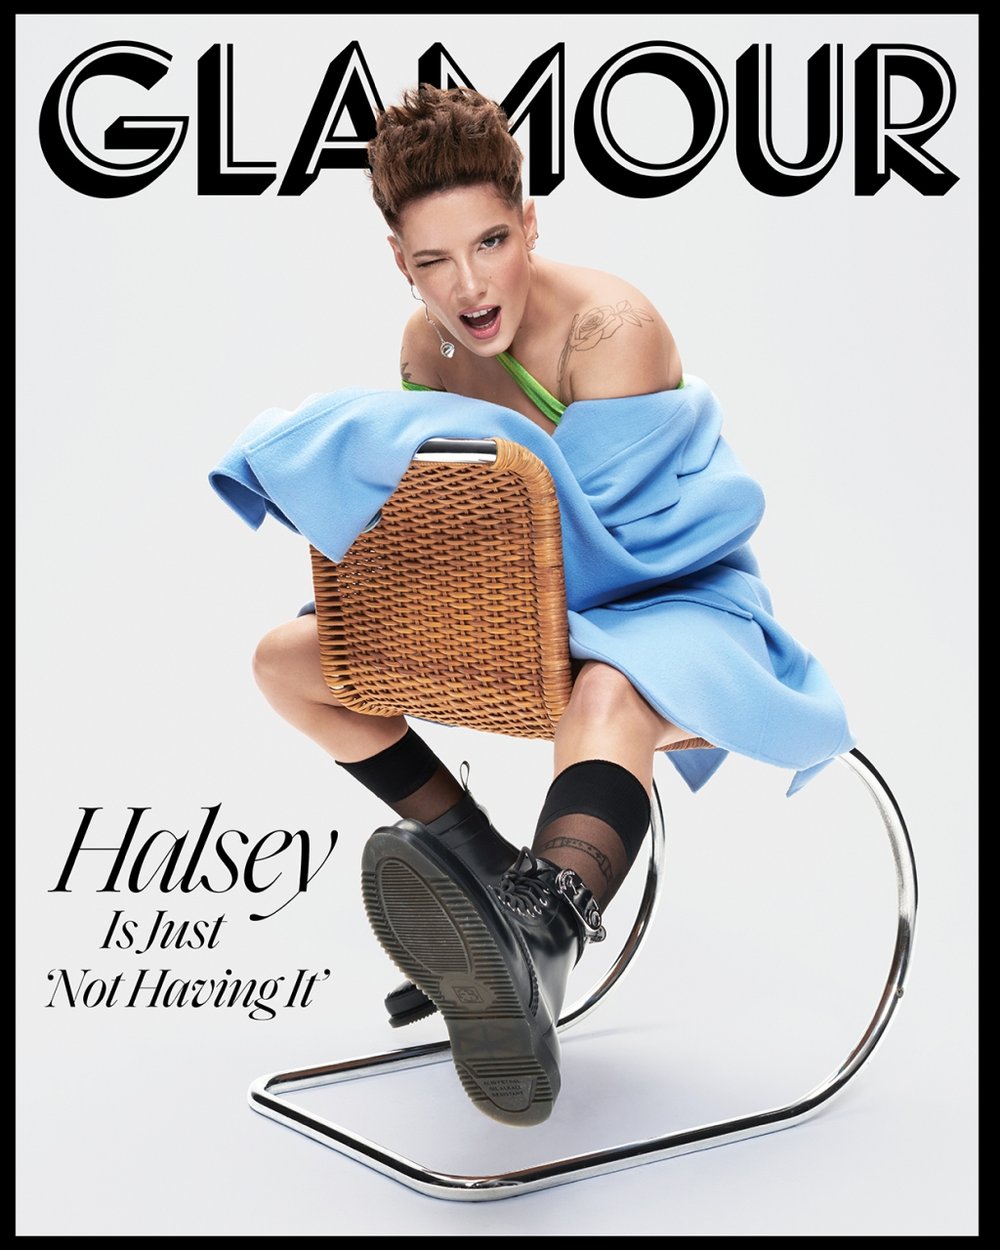 halsey-glamour-cover-2019-billboard-embed.jpg